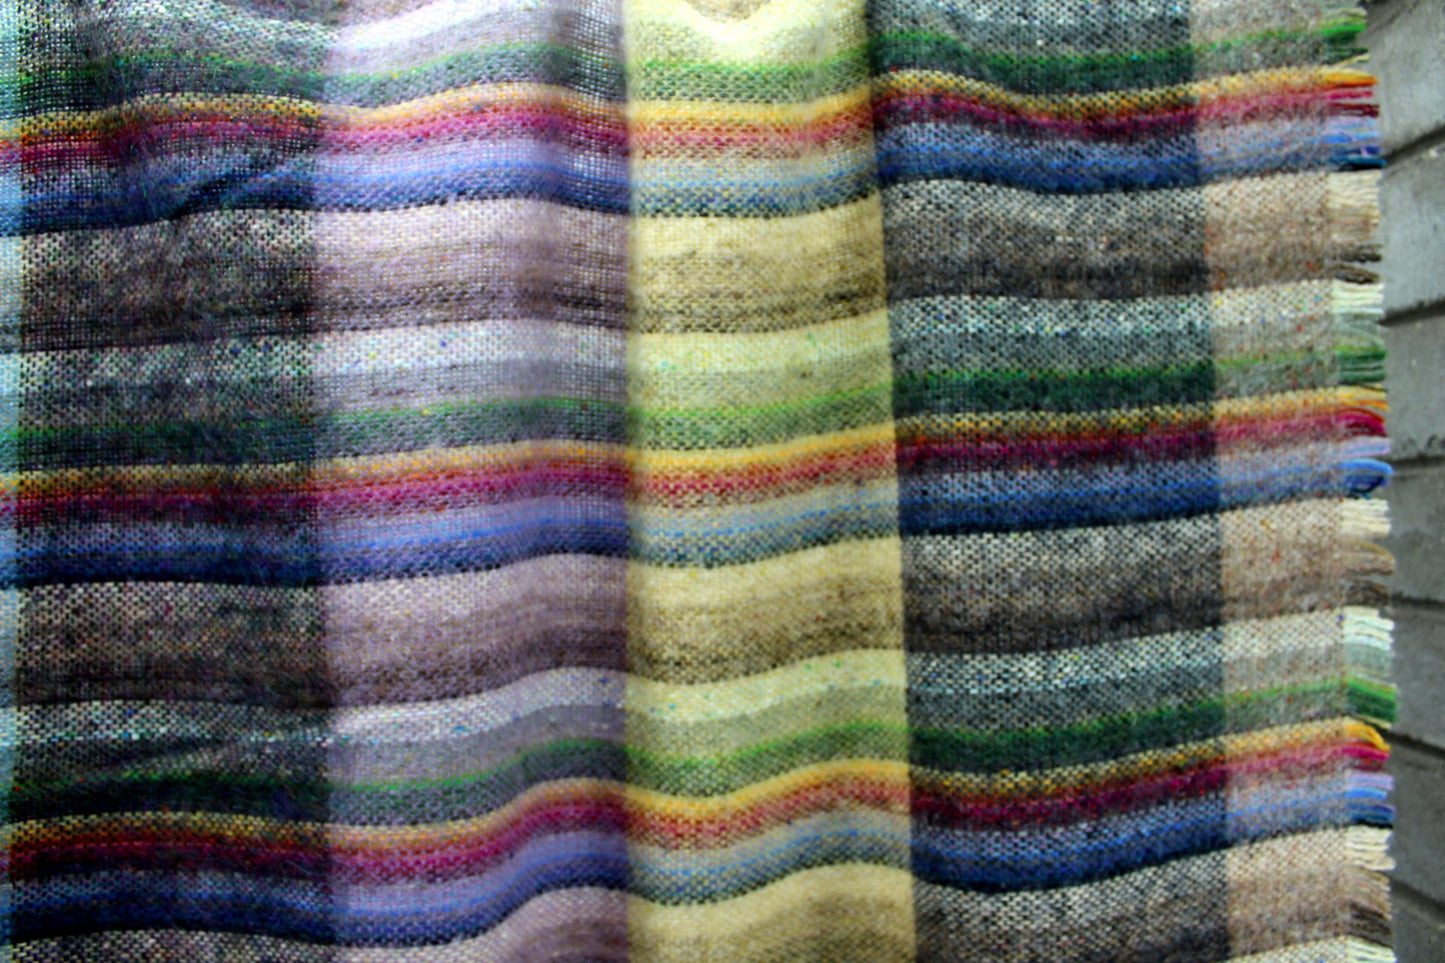 Donegal Handwoven Tweed John Molloy Throw Blanket - Lambswool Fringed Awesome unusual tweed blanket